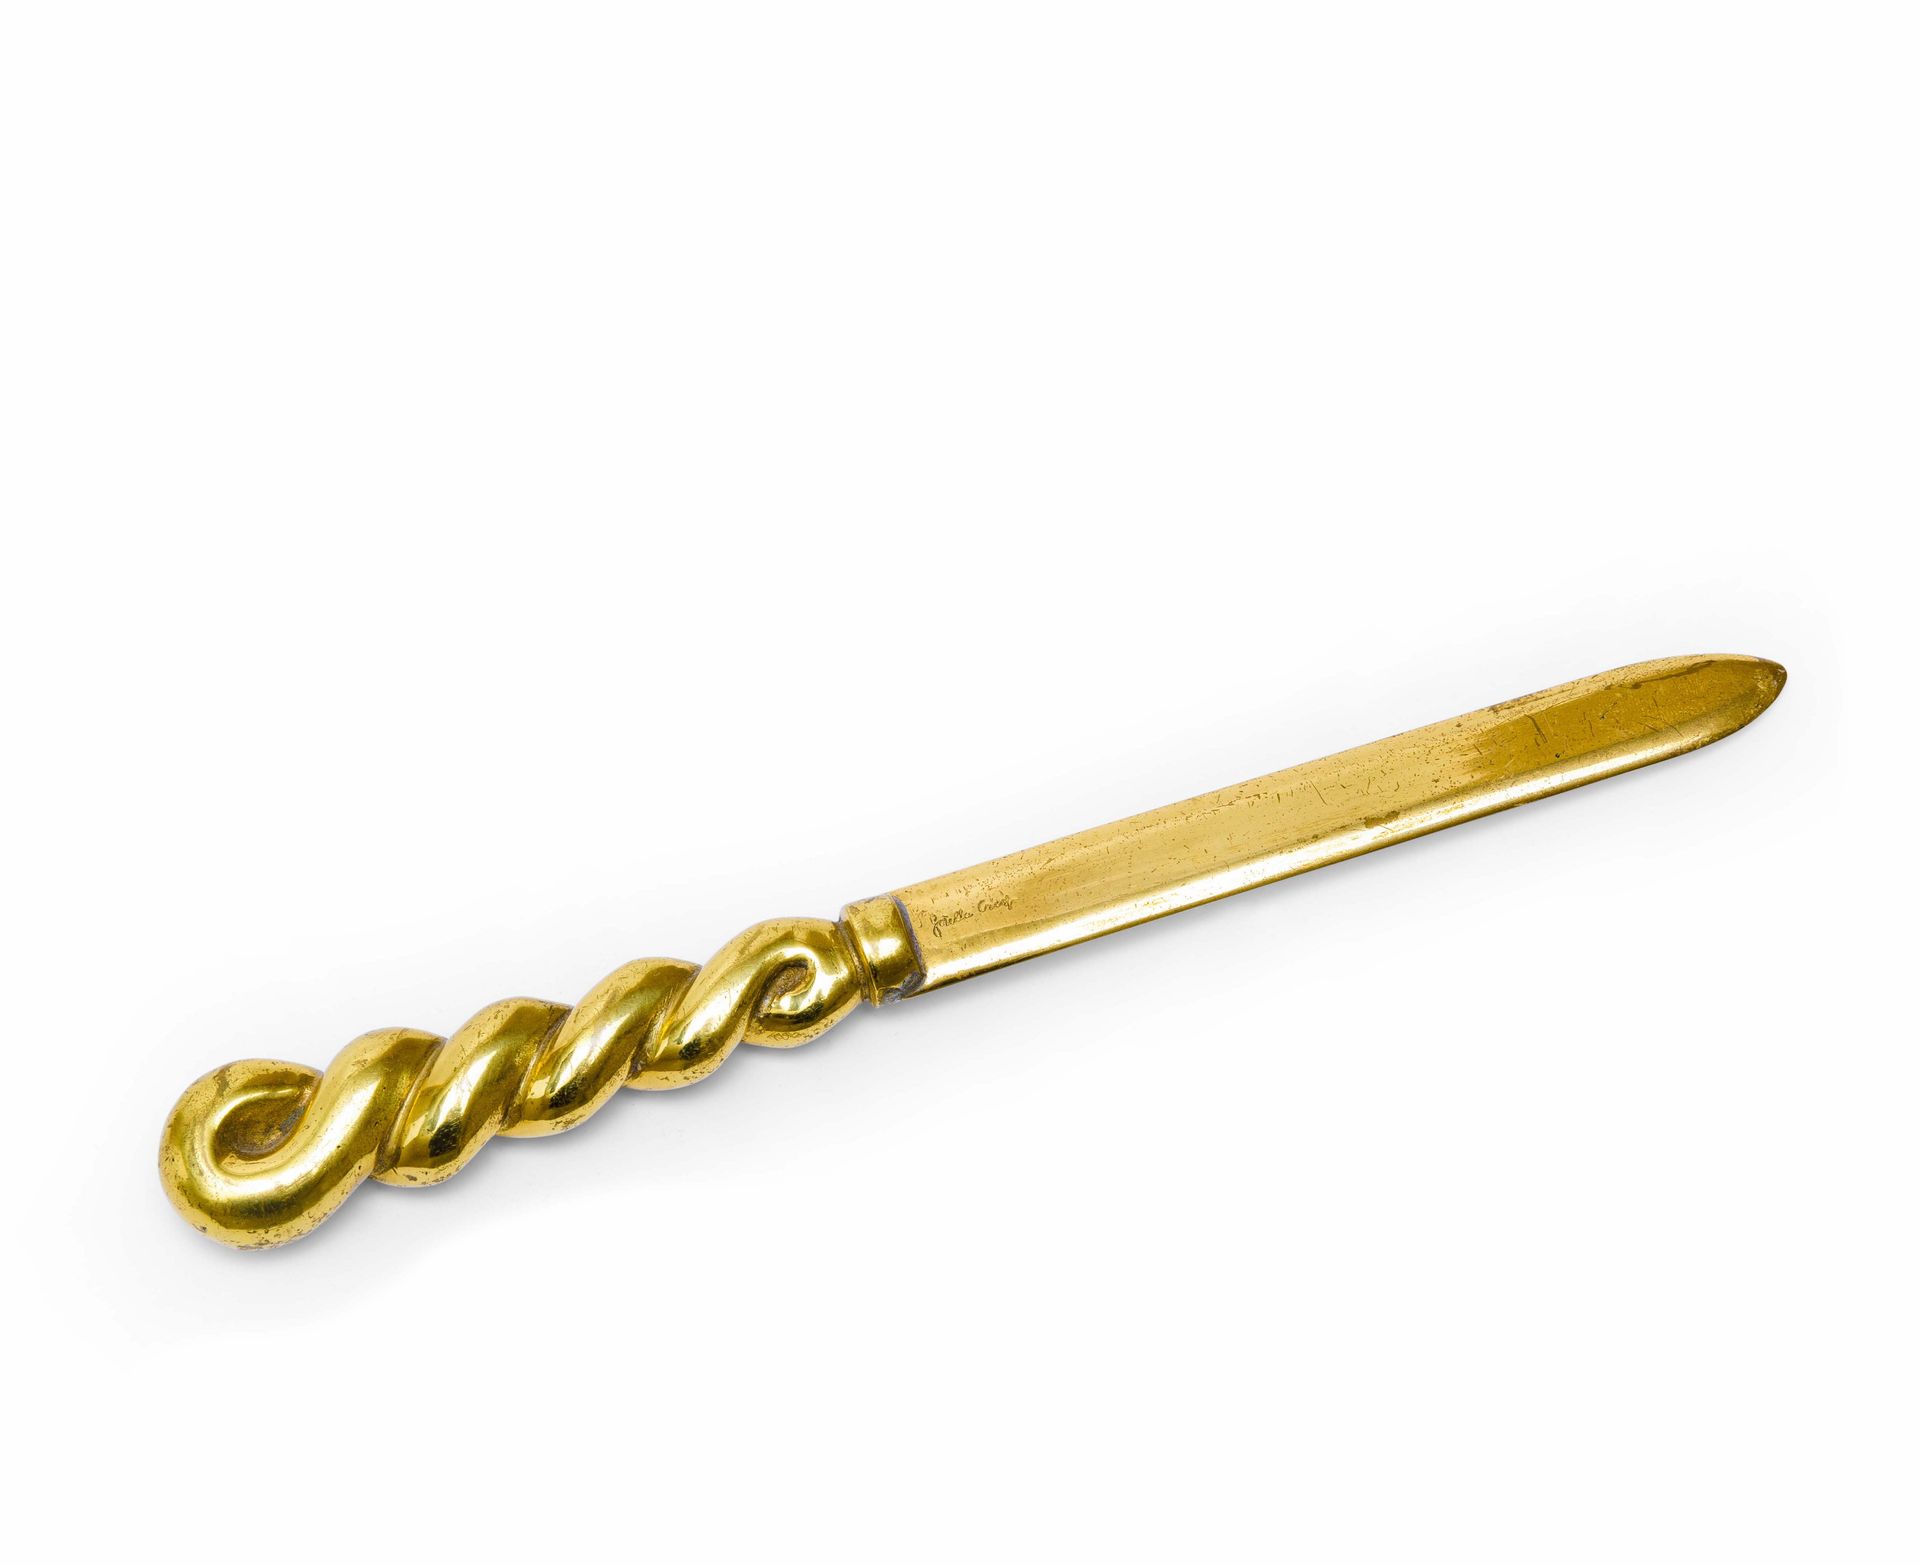 Gabriella Crespi, 带原包装的黄铜开信刀。雕刻的签名。意大利制造，约1970年。宽23 - 深2,5 - 高1,5厘米